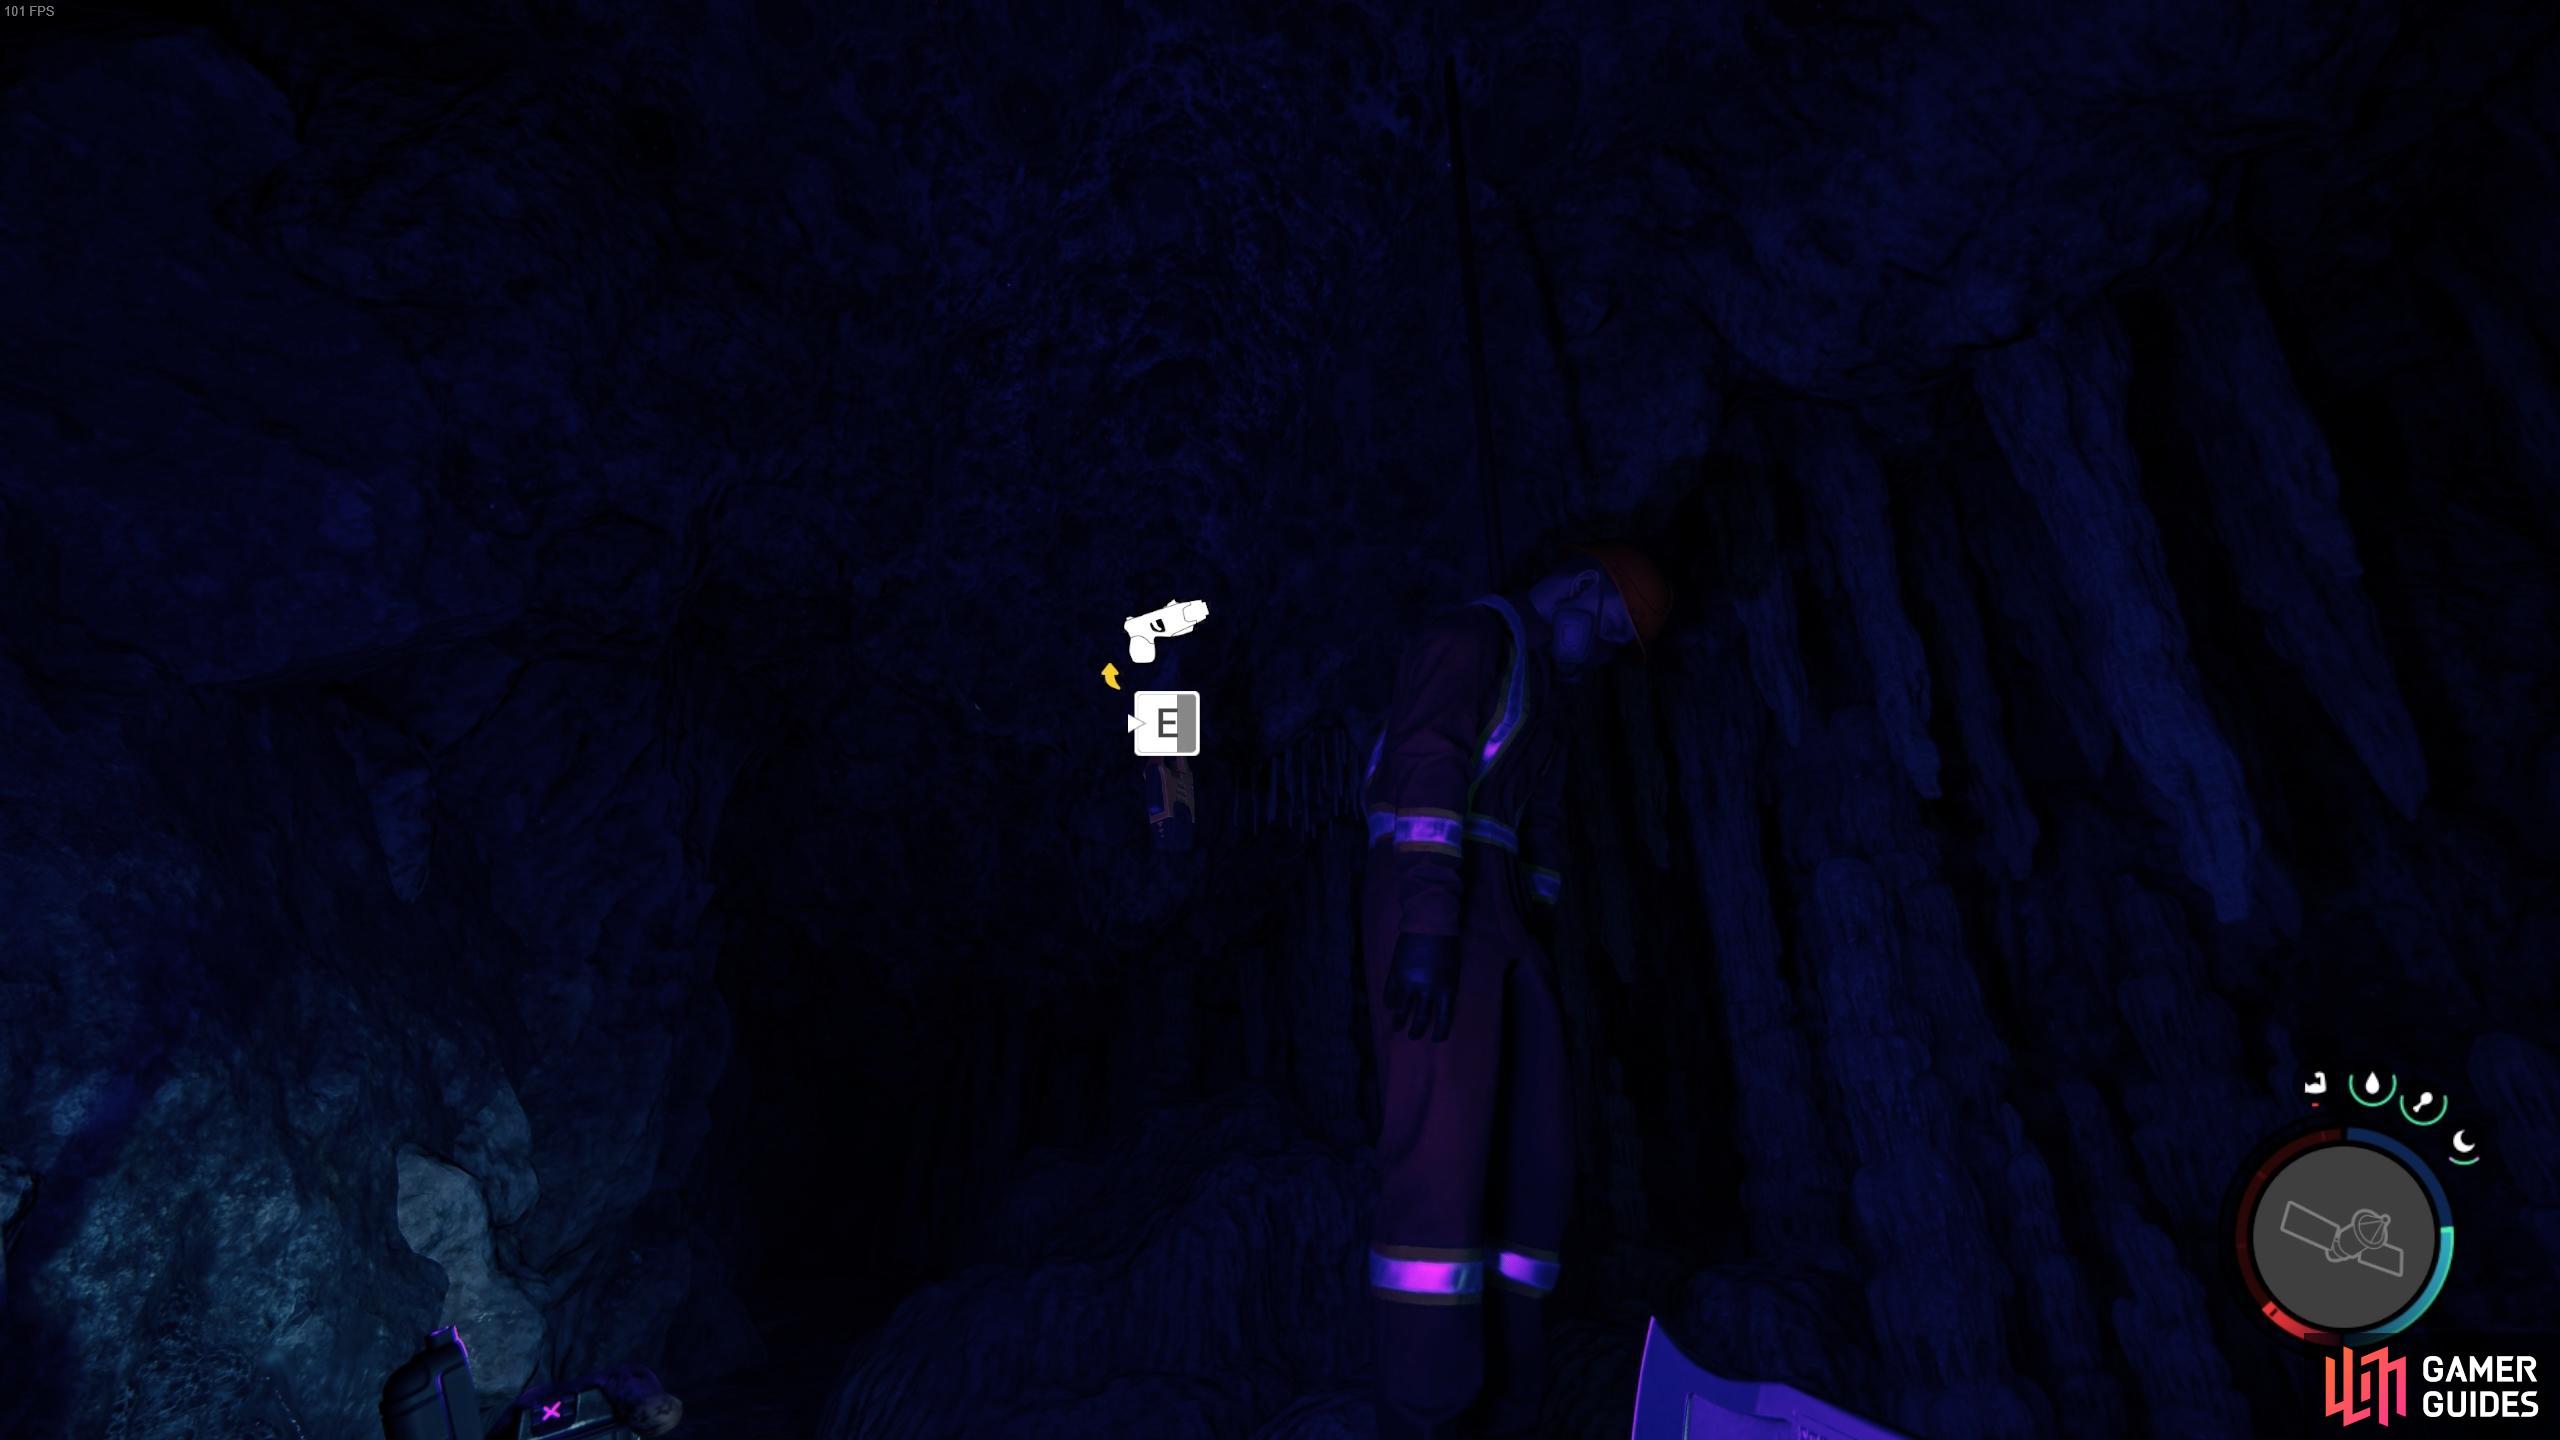 You can find the Stun Gun inside a cave.